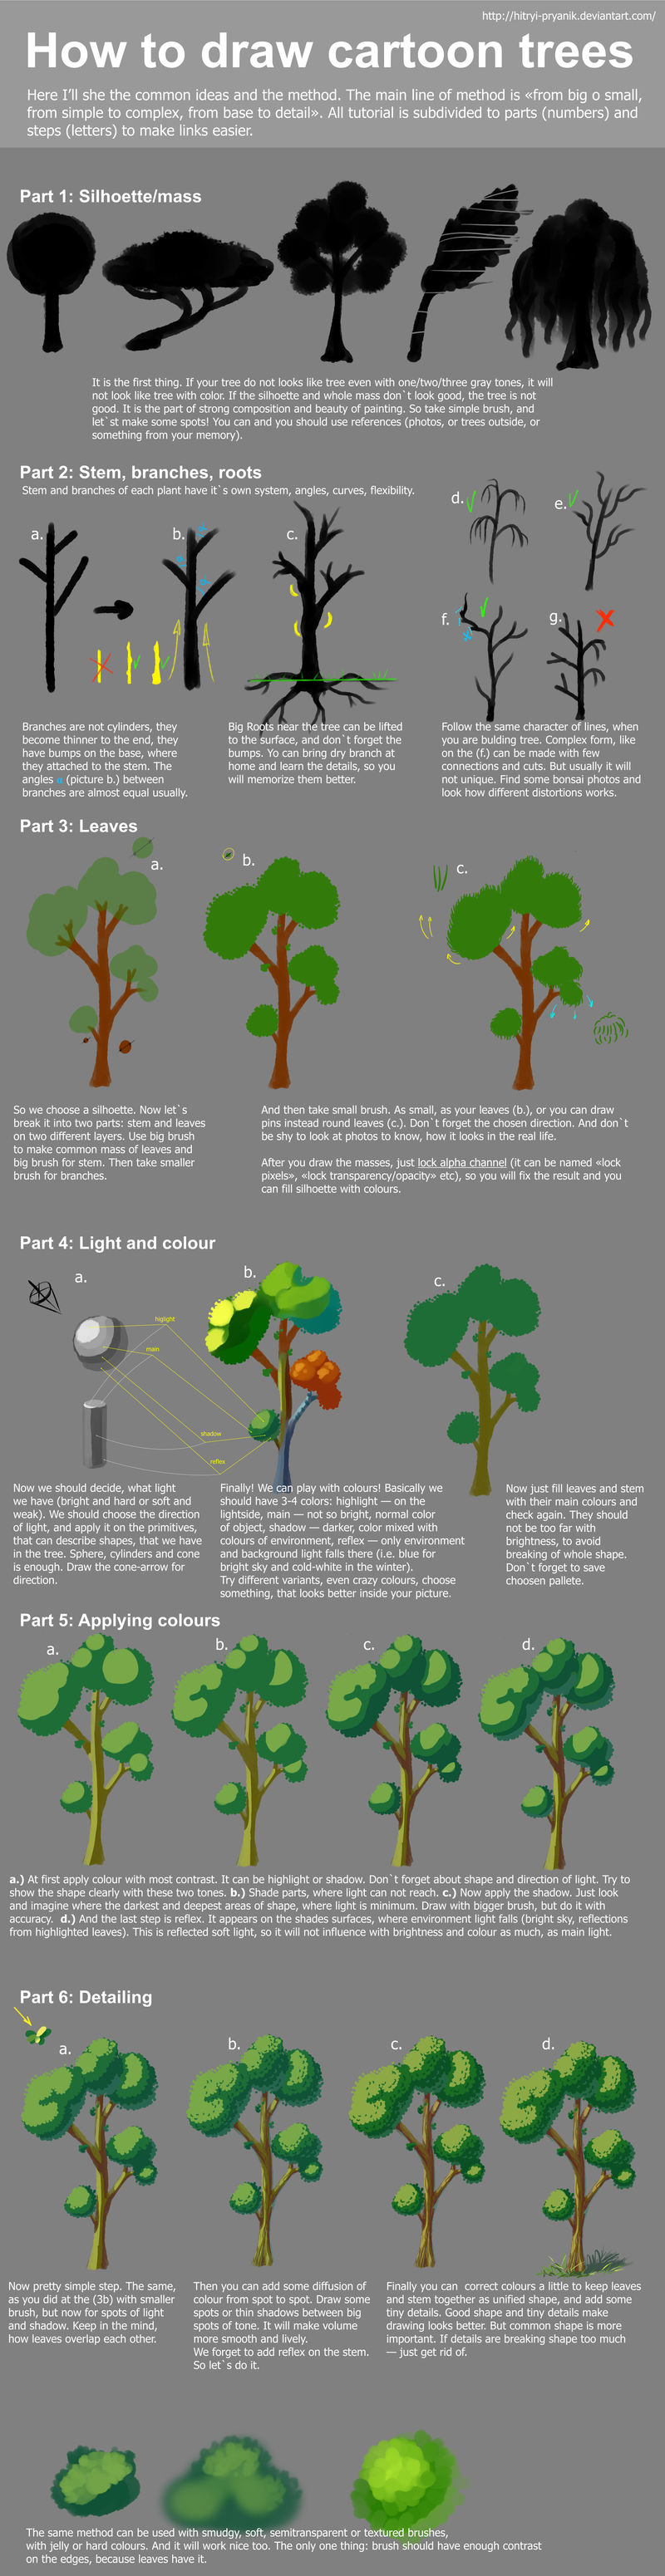 How to draw cartoon trees by Hitryi-Pryanik on DeviantArt